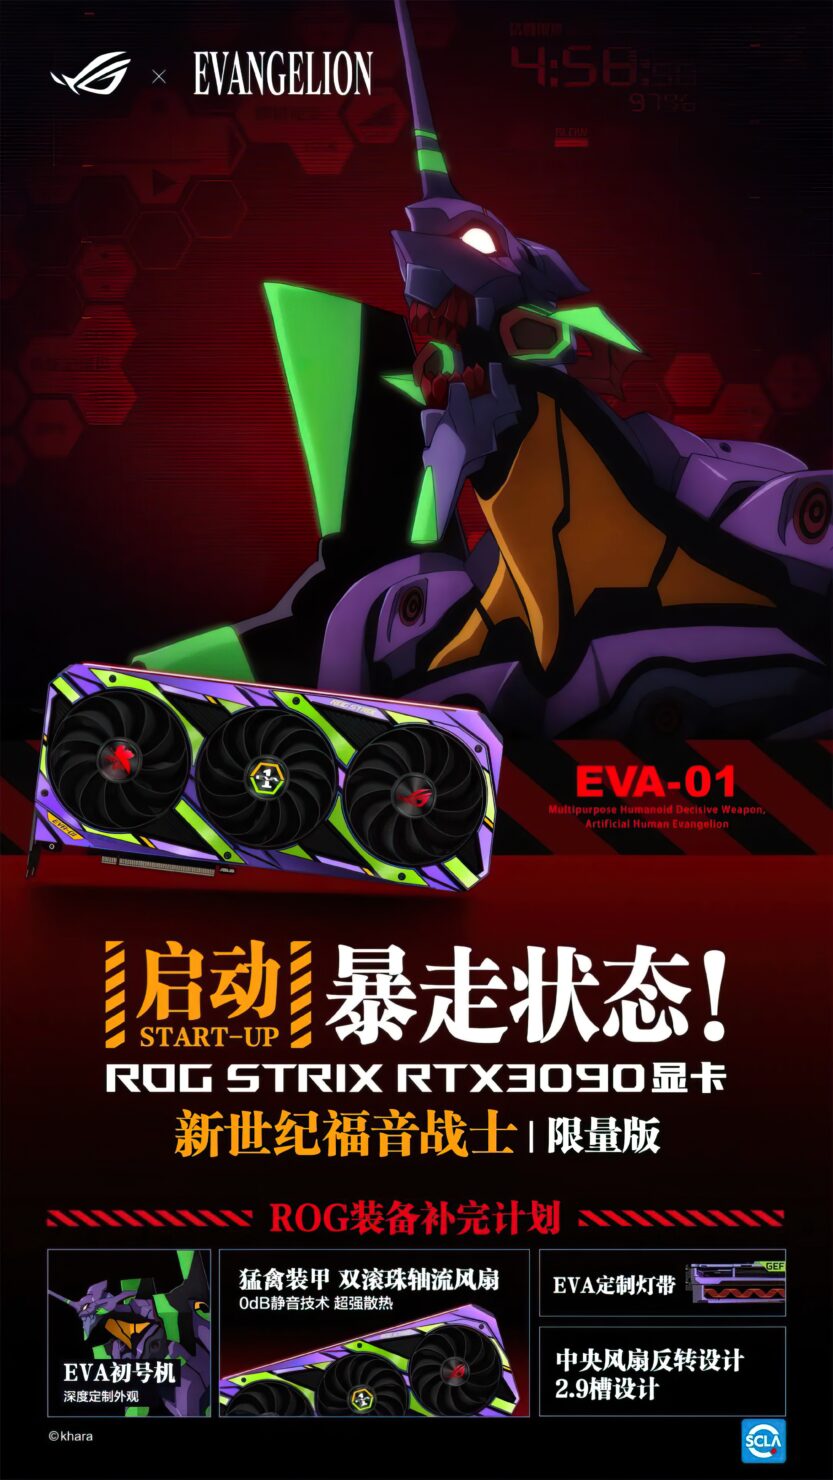 ASUS ROG Evangelion Graphics Card EVA 01 1 low res scale 4 00x 833x1480 1